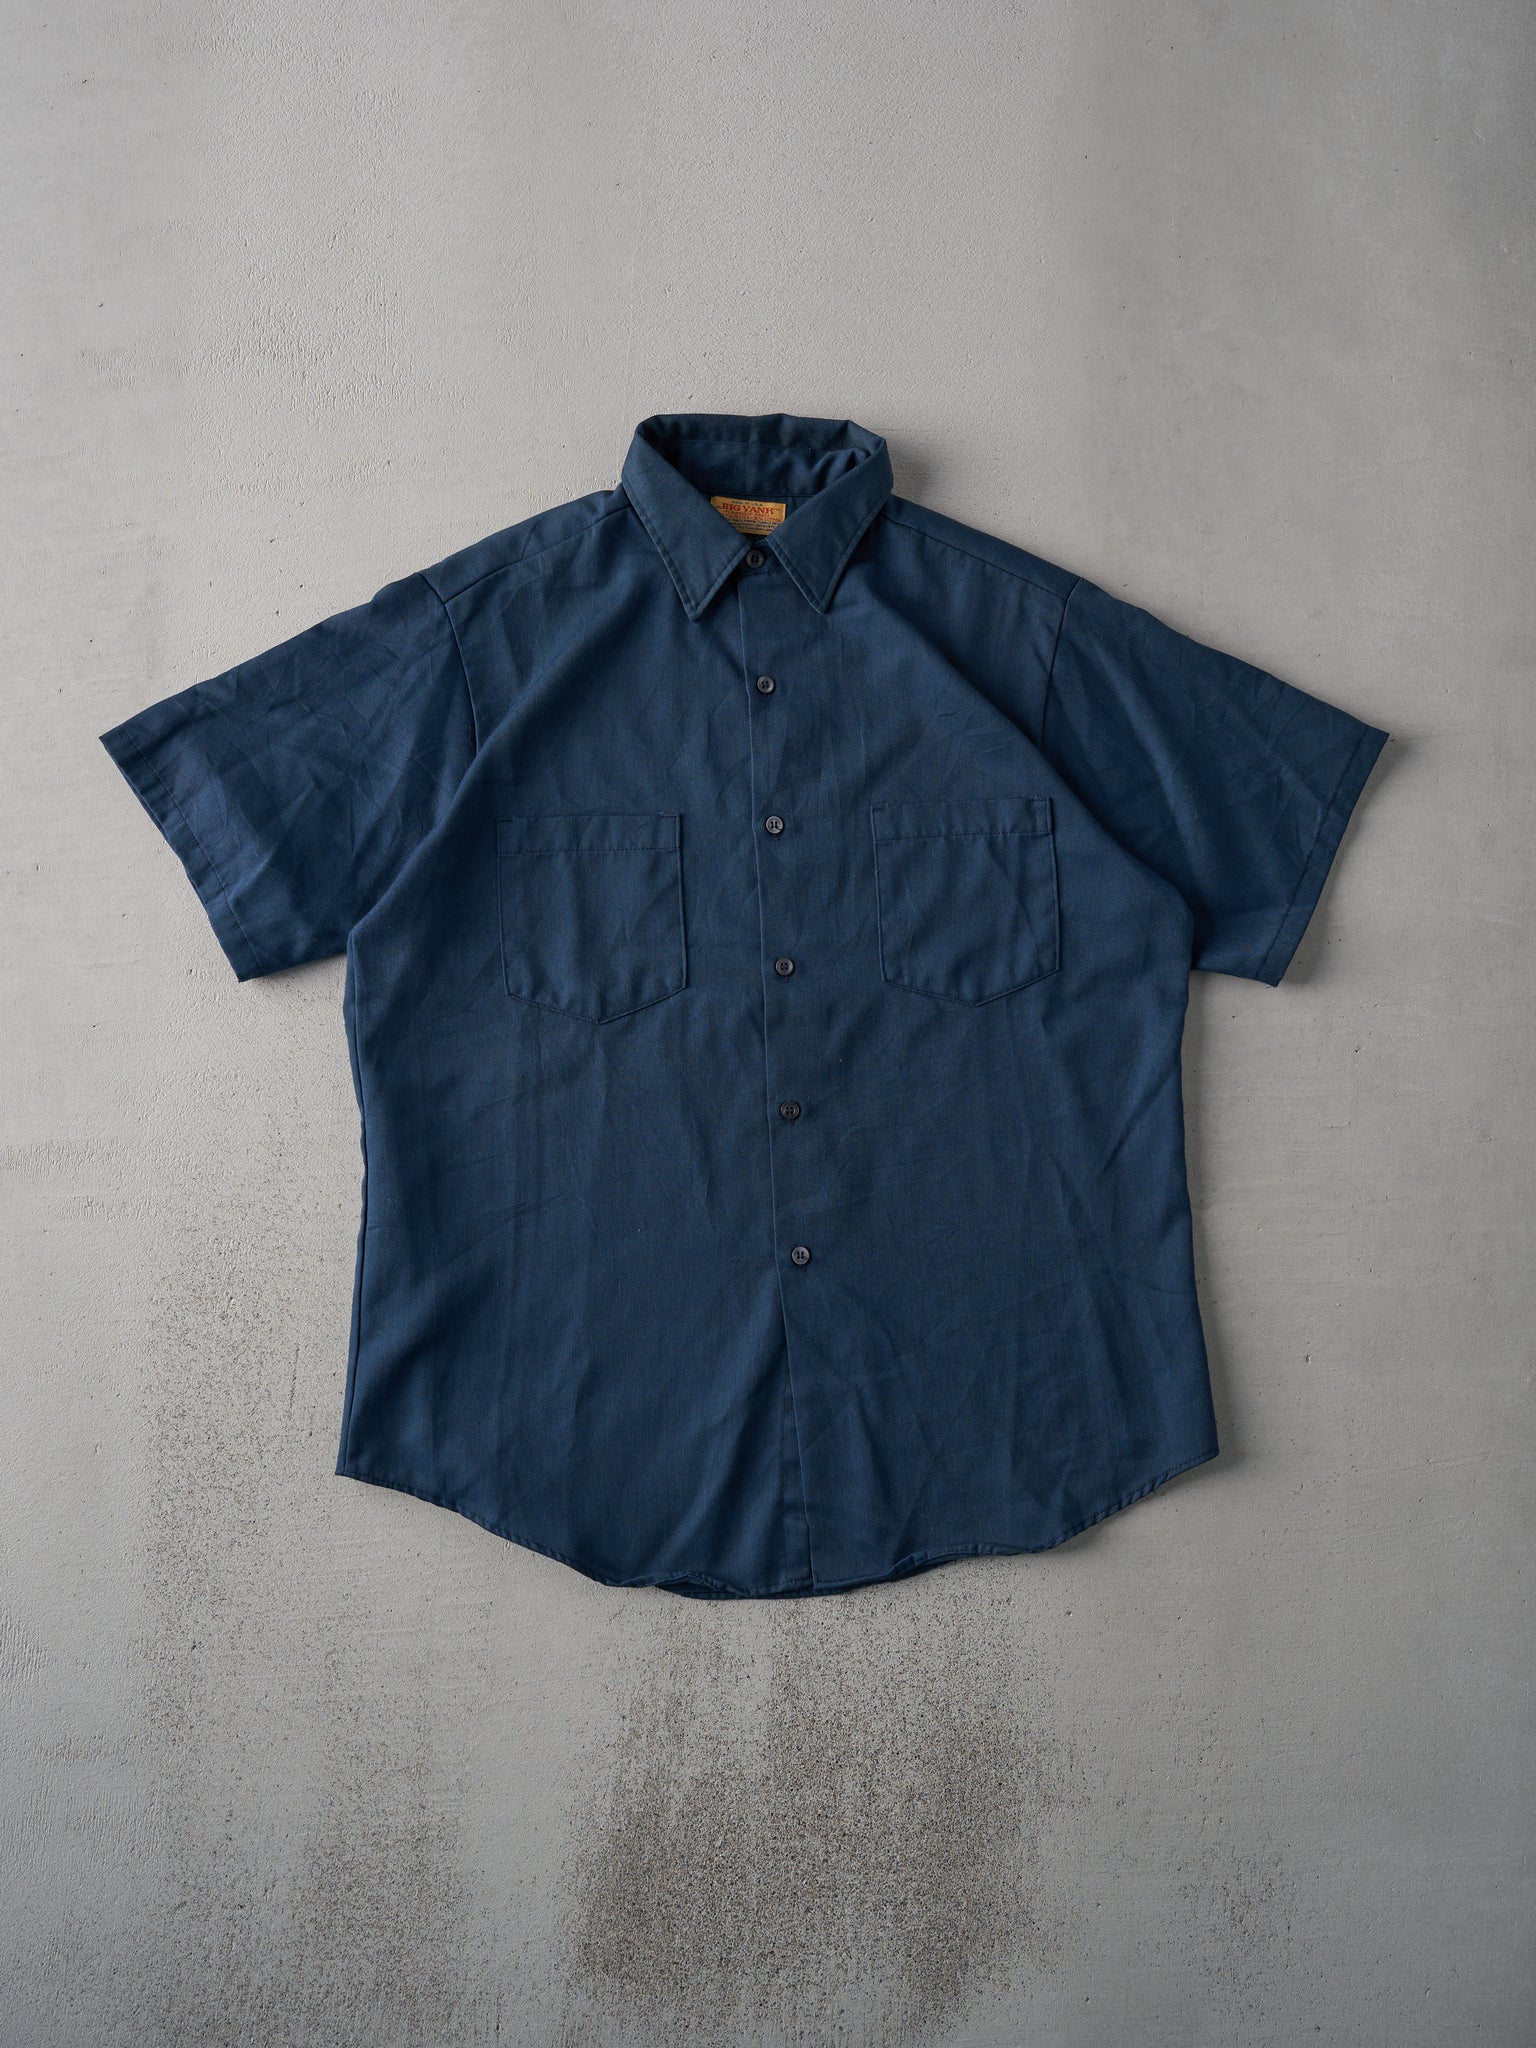 Vintage 70s Navy Blue Big Yank Button Up Shirt (L)